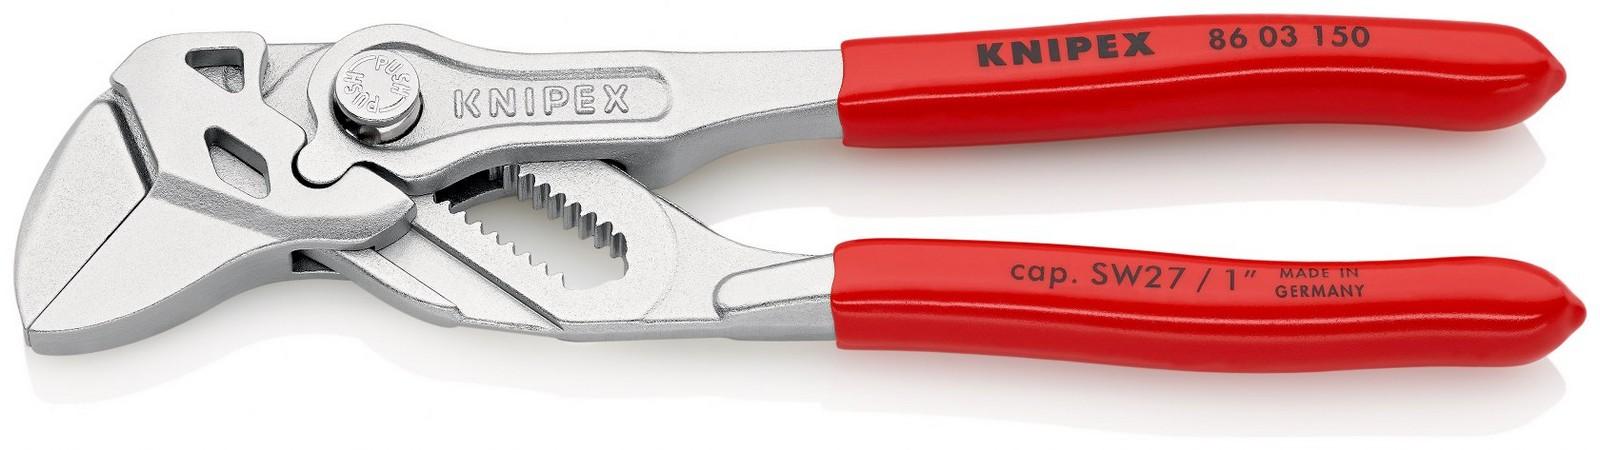 KNIPEX Klešta ključ 150mm 86 03 150 crvena